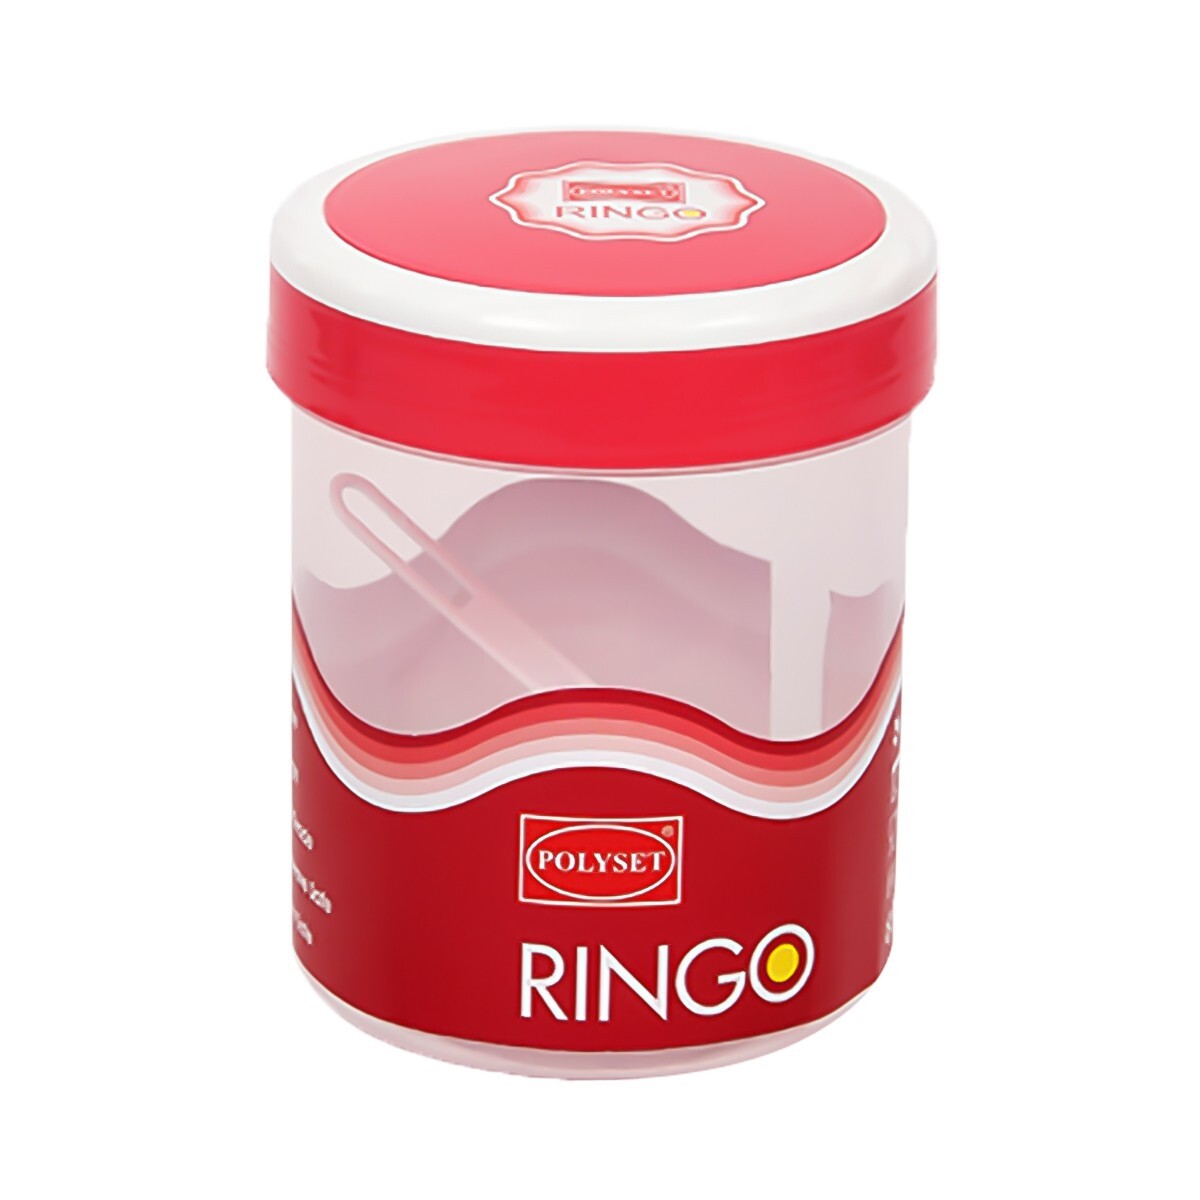 Polyset Ringo Container 1625 3Pc